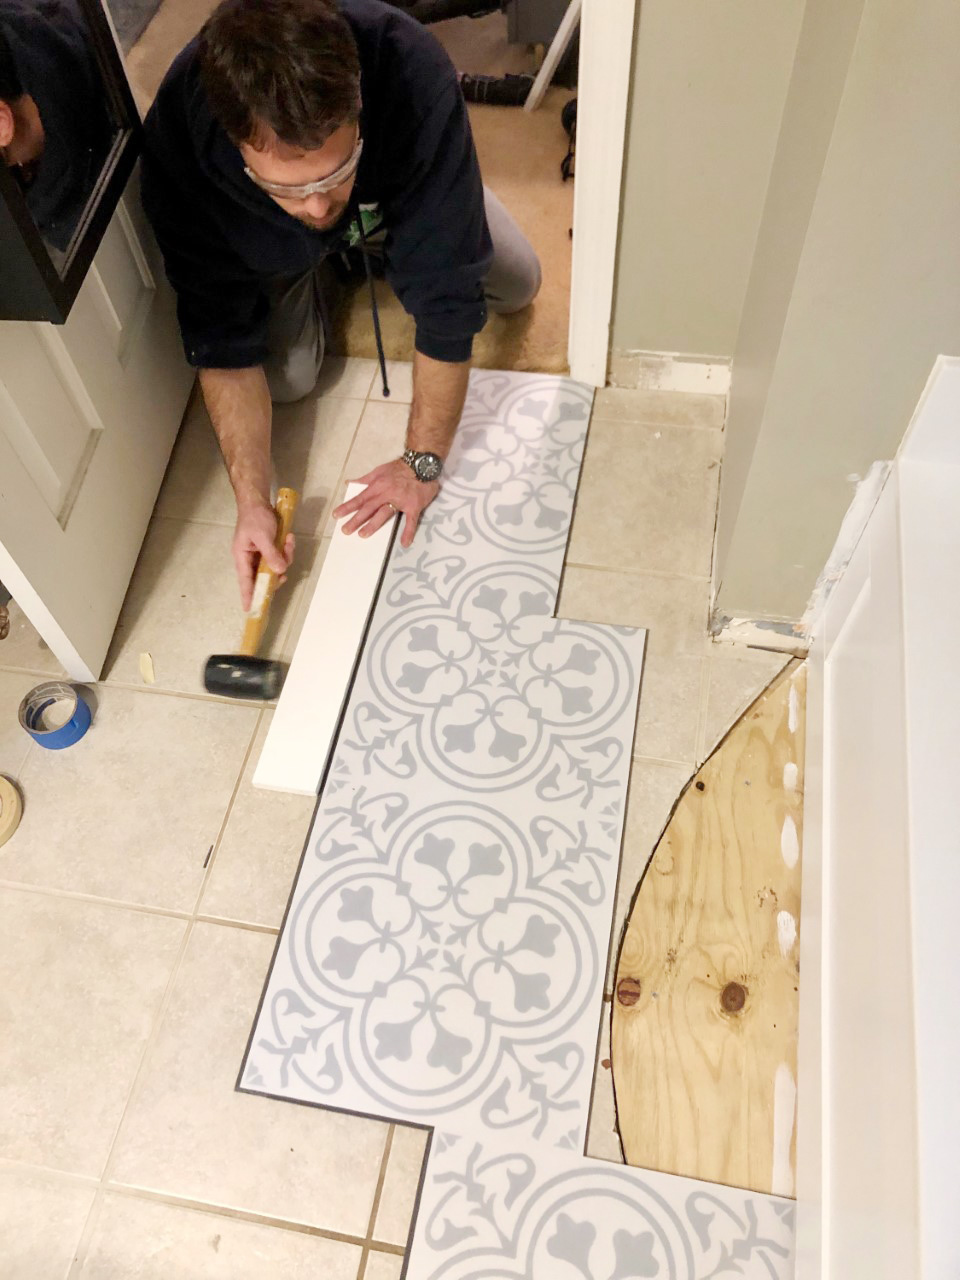 Lvt Flooring Over Existing Tile The, Can You Put Hardwood Floors Over Tile